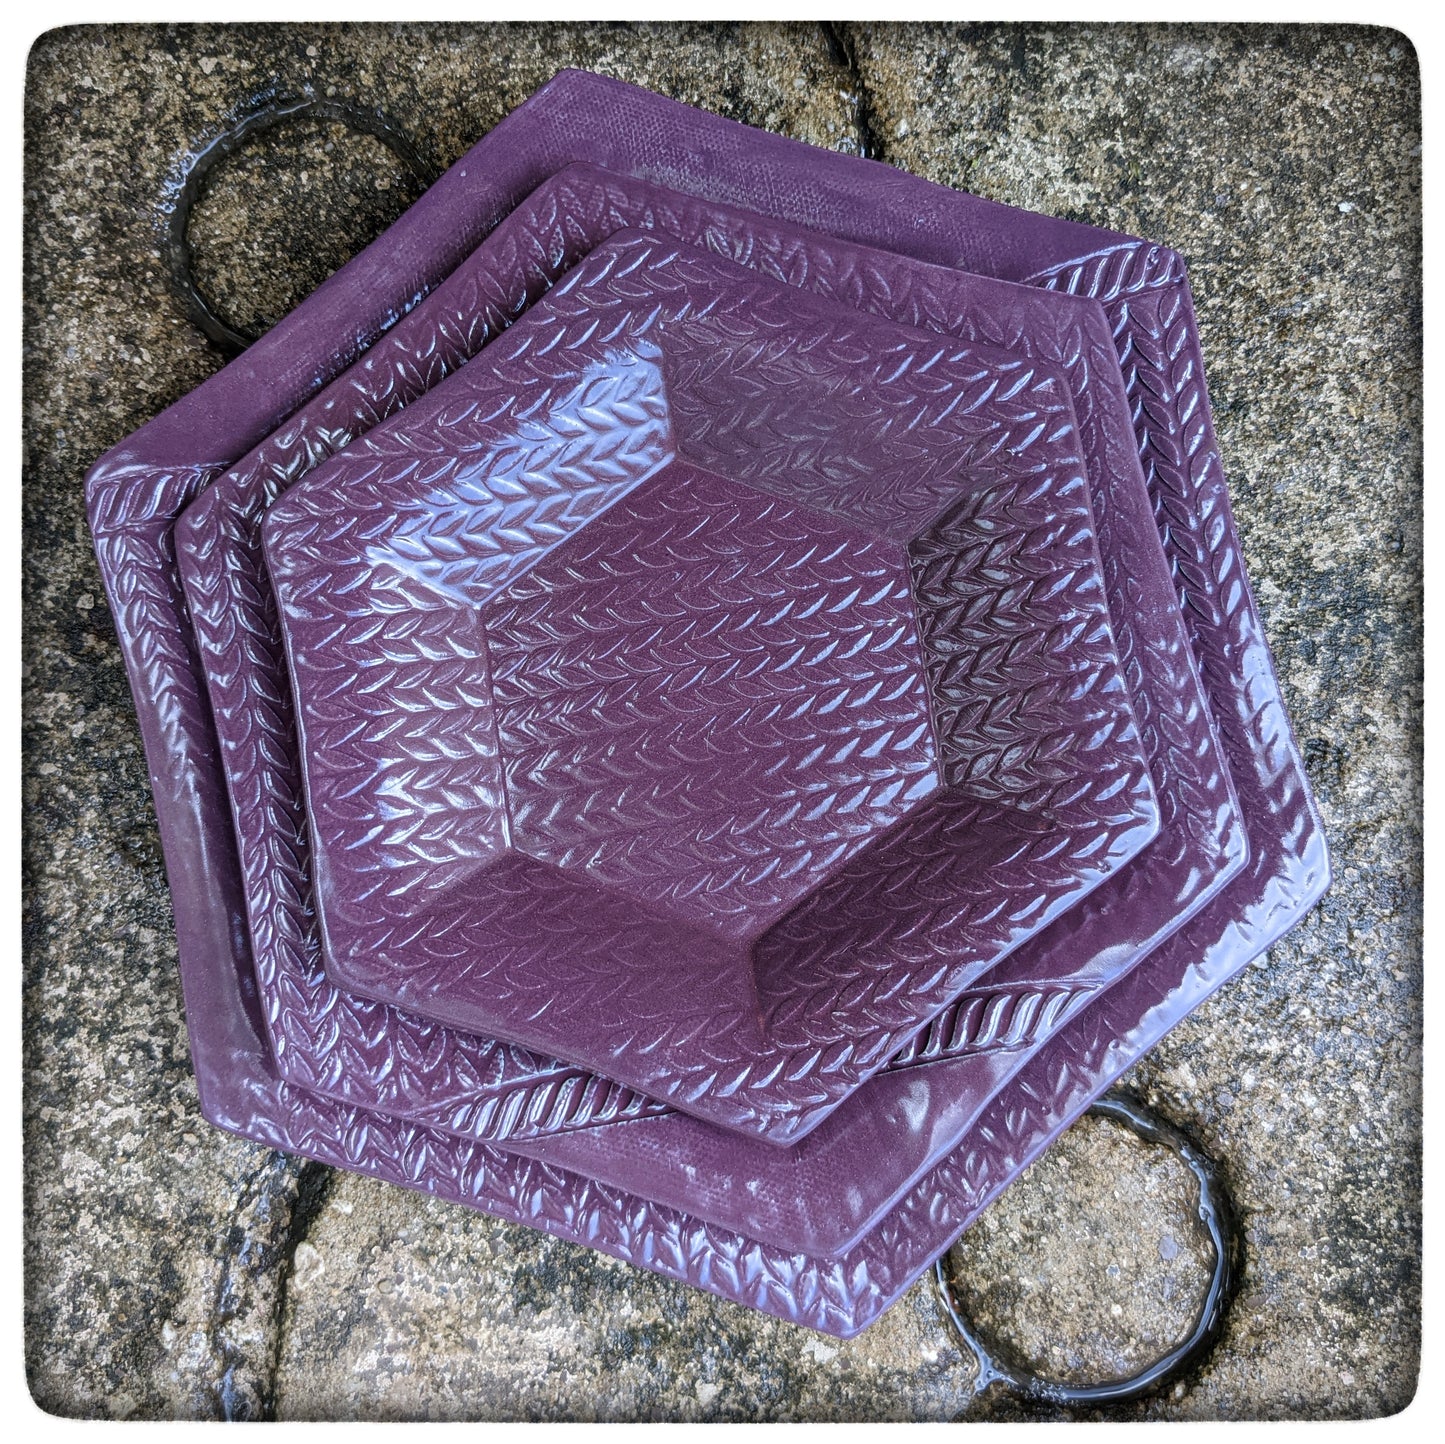 Knit hexagon dish (7 inch)